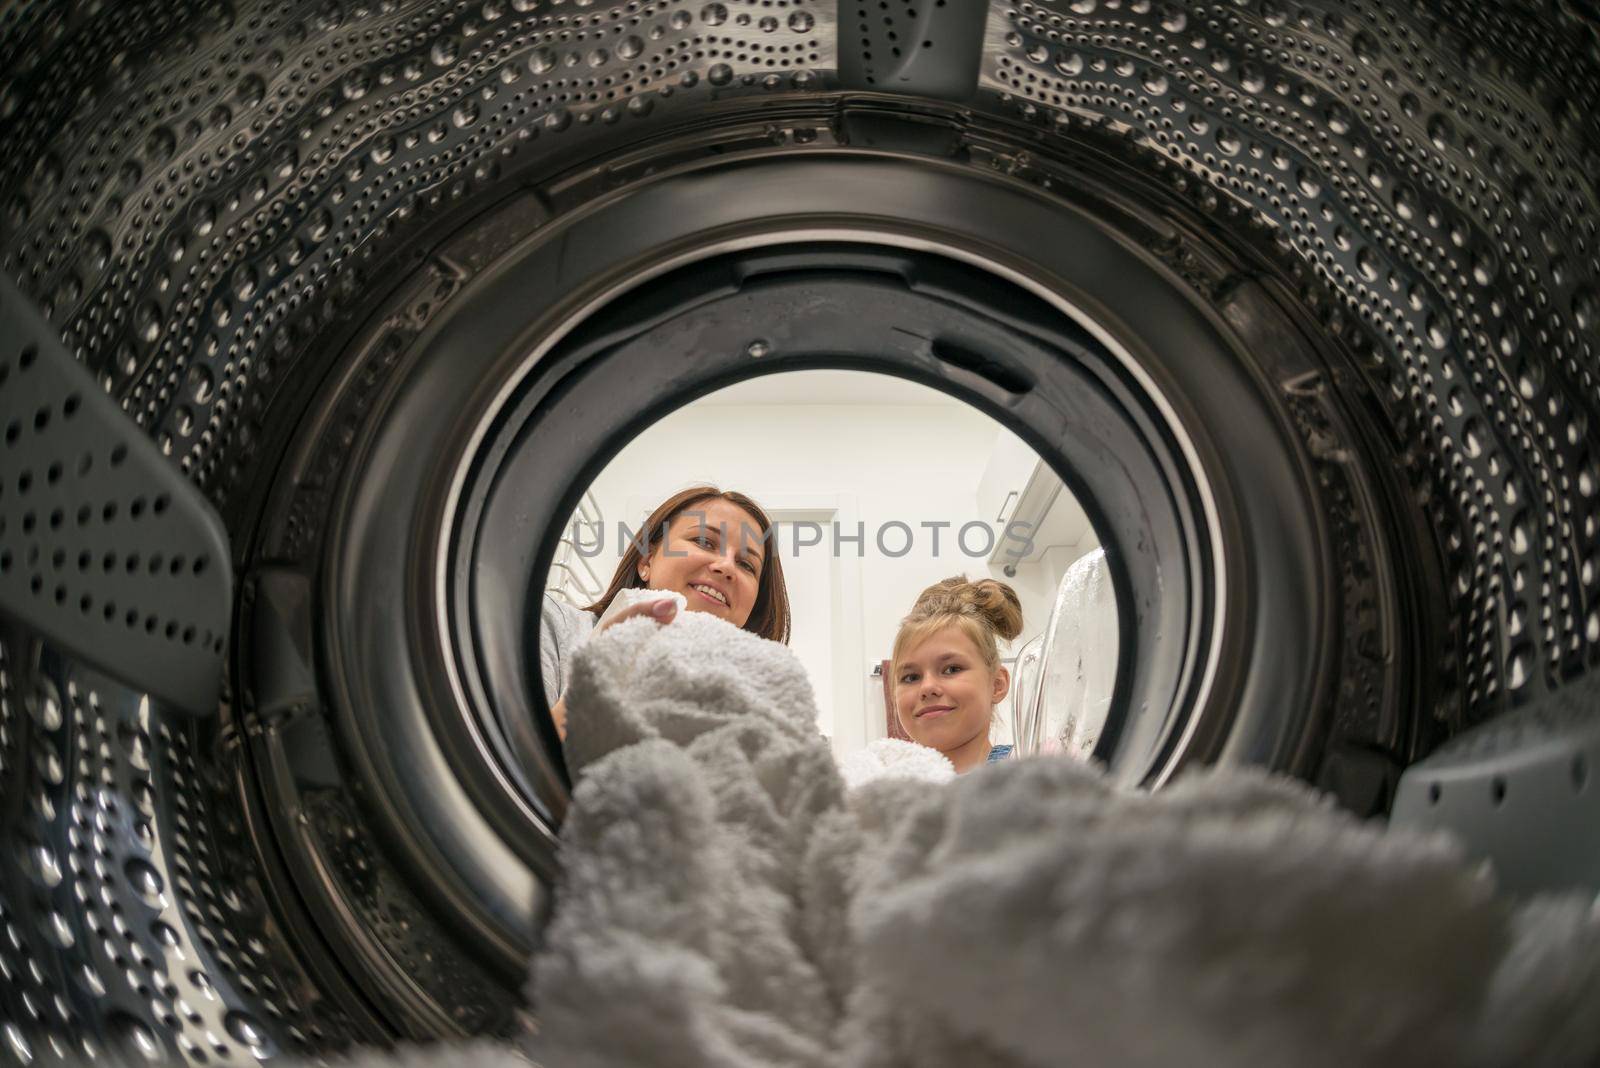 Woman Doing Laundry with daughter Reaching towel Inside Washing Machine